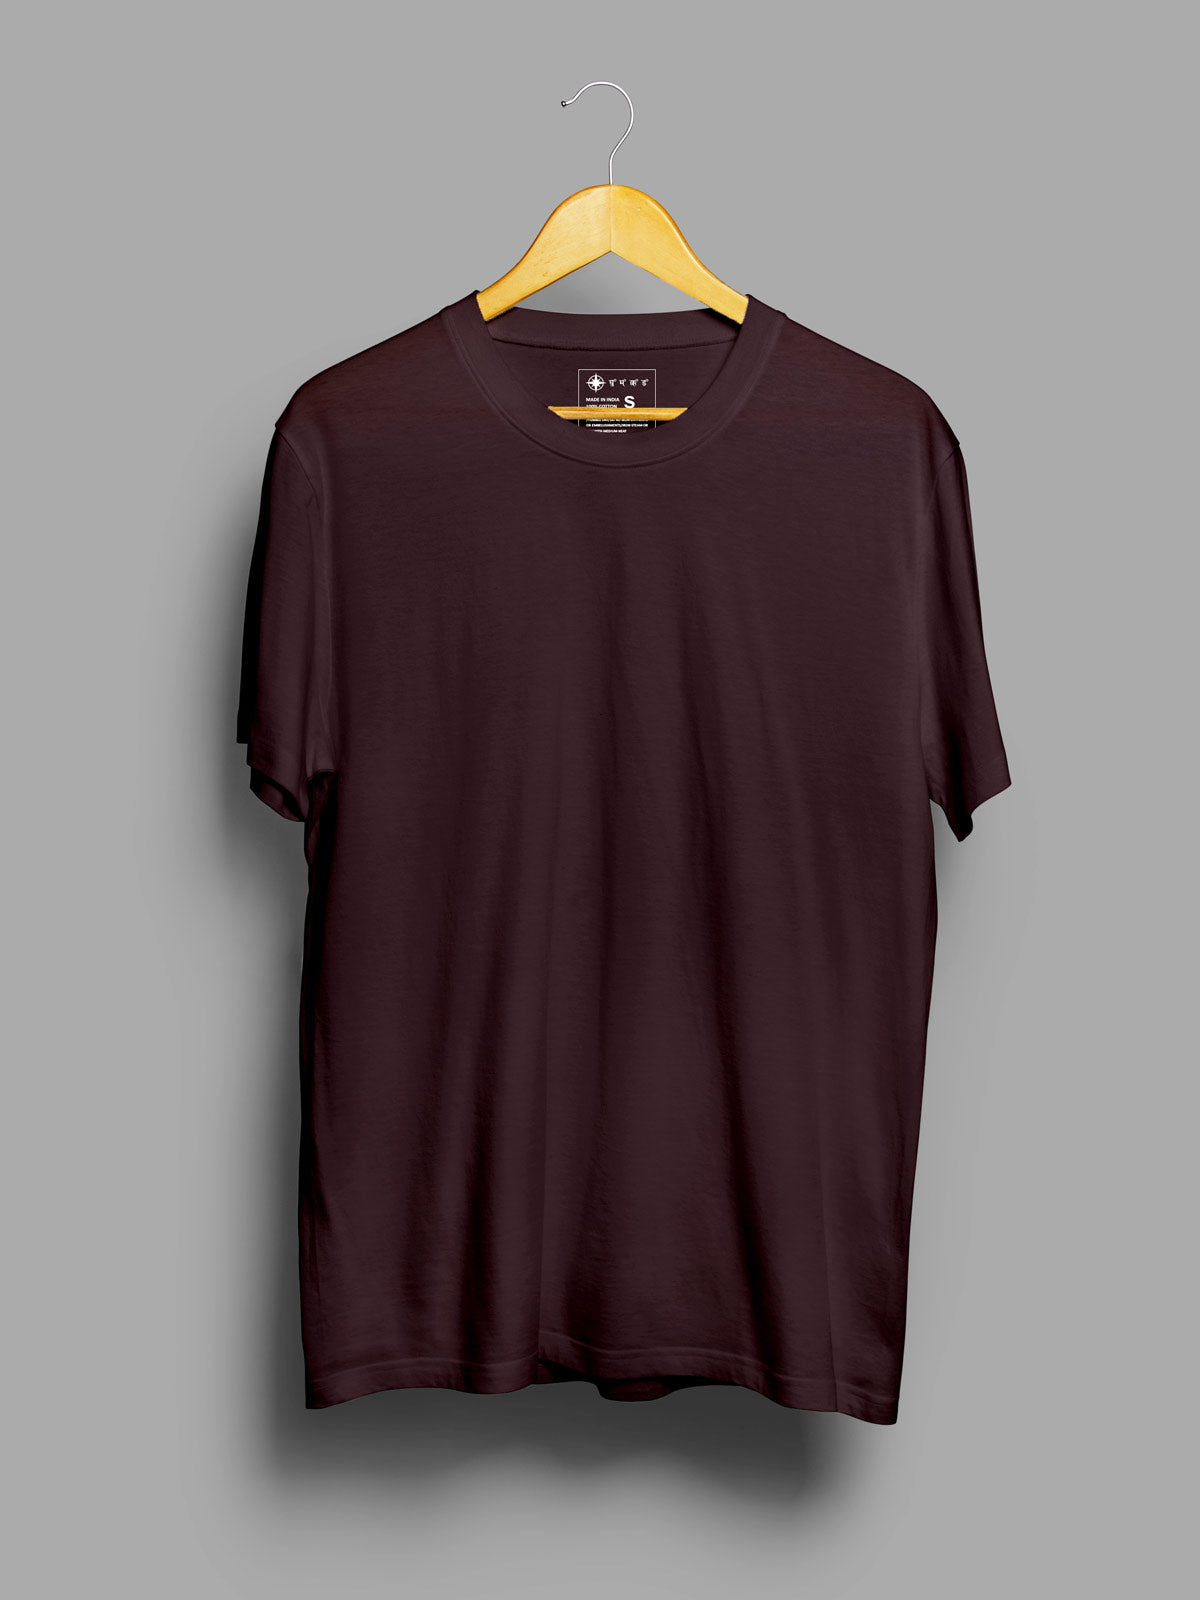 Coffee Brown | Unisex Plain T shirt by shopghumakkad